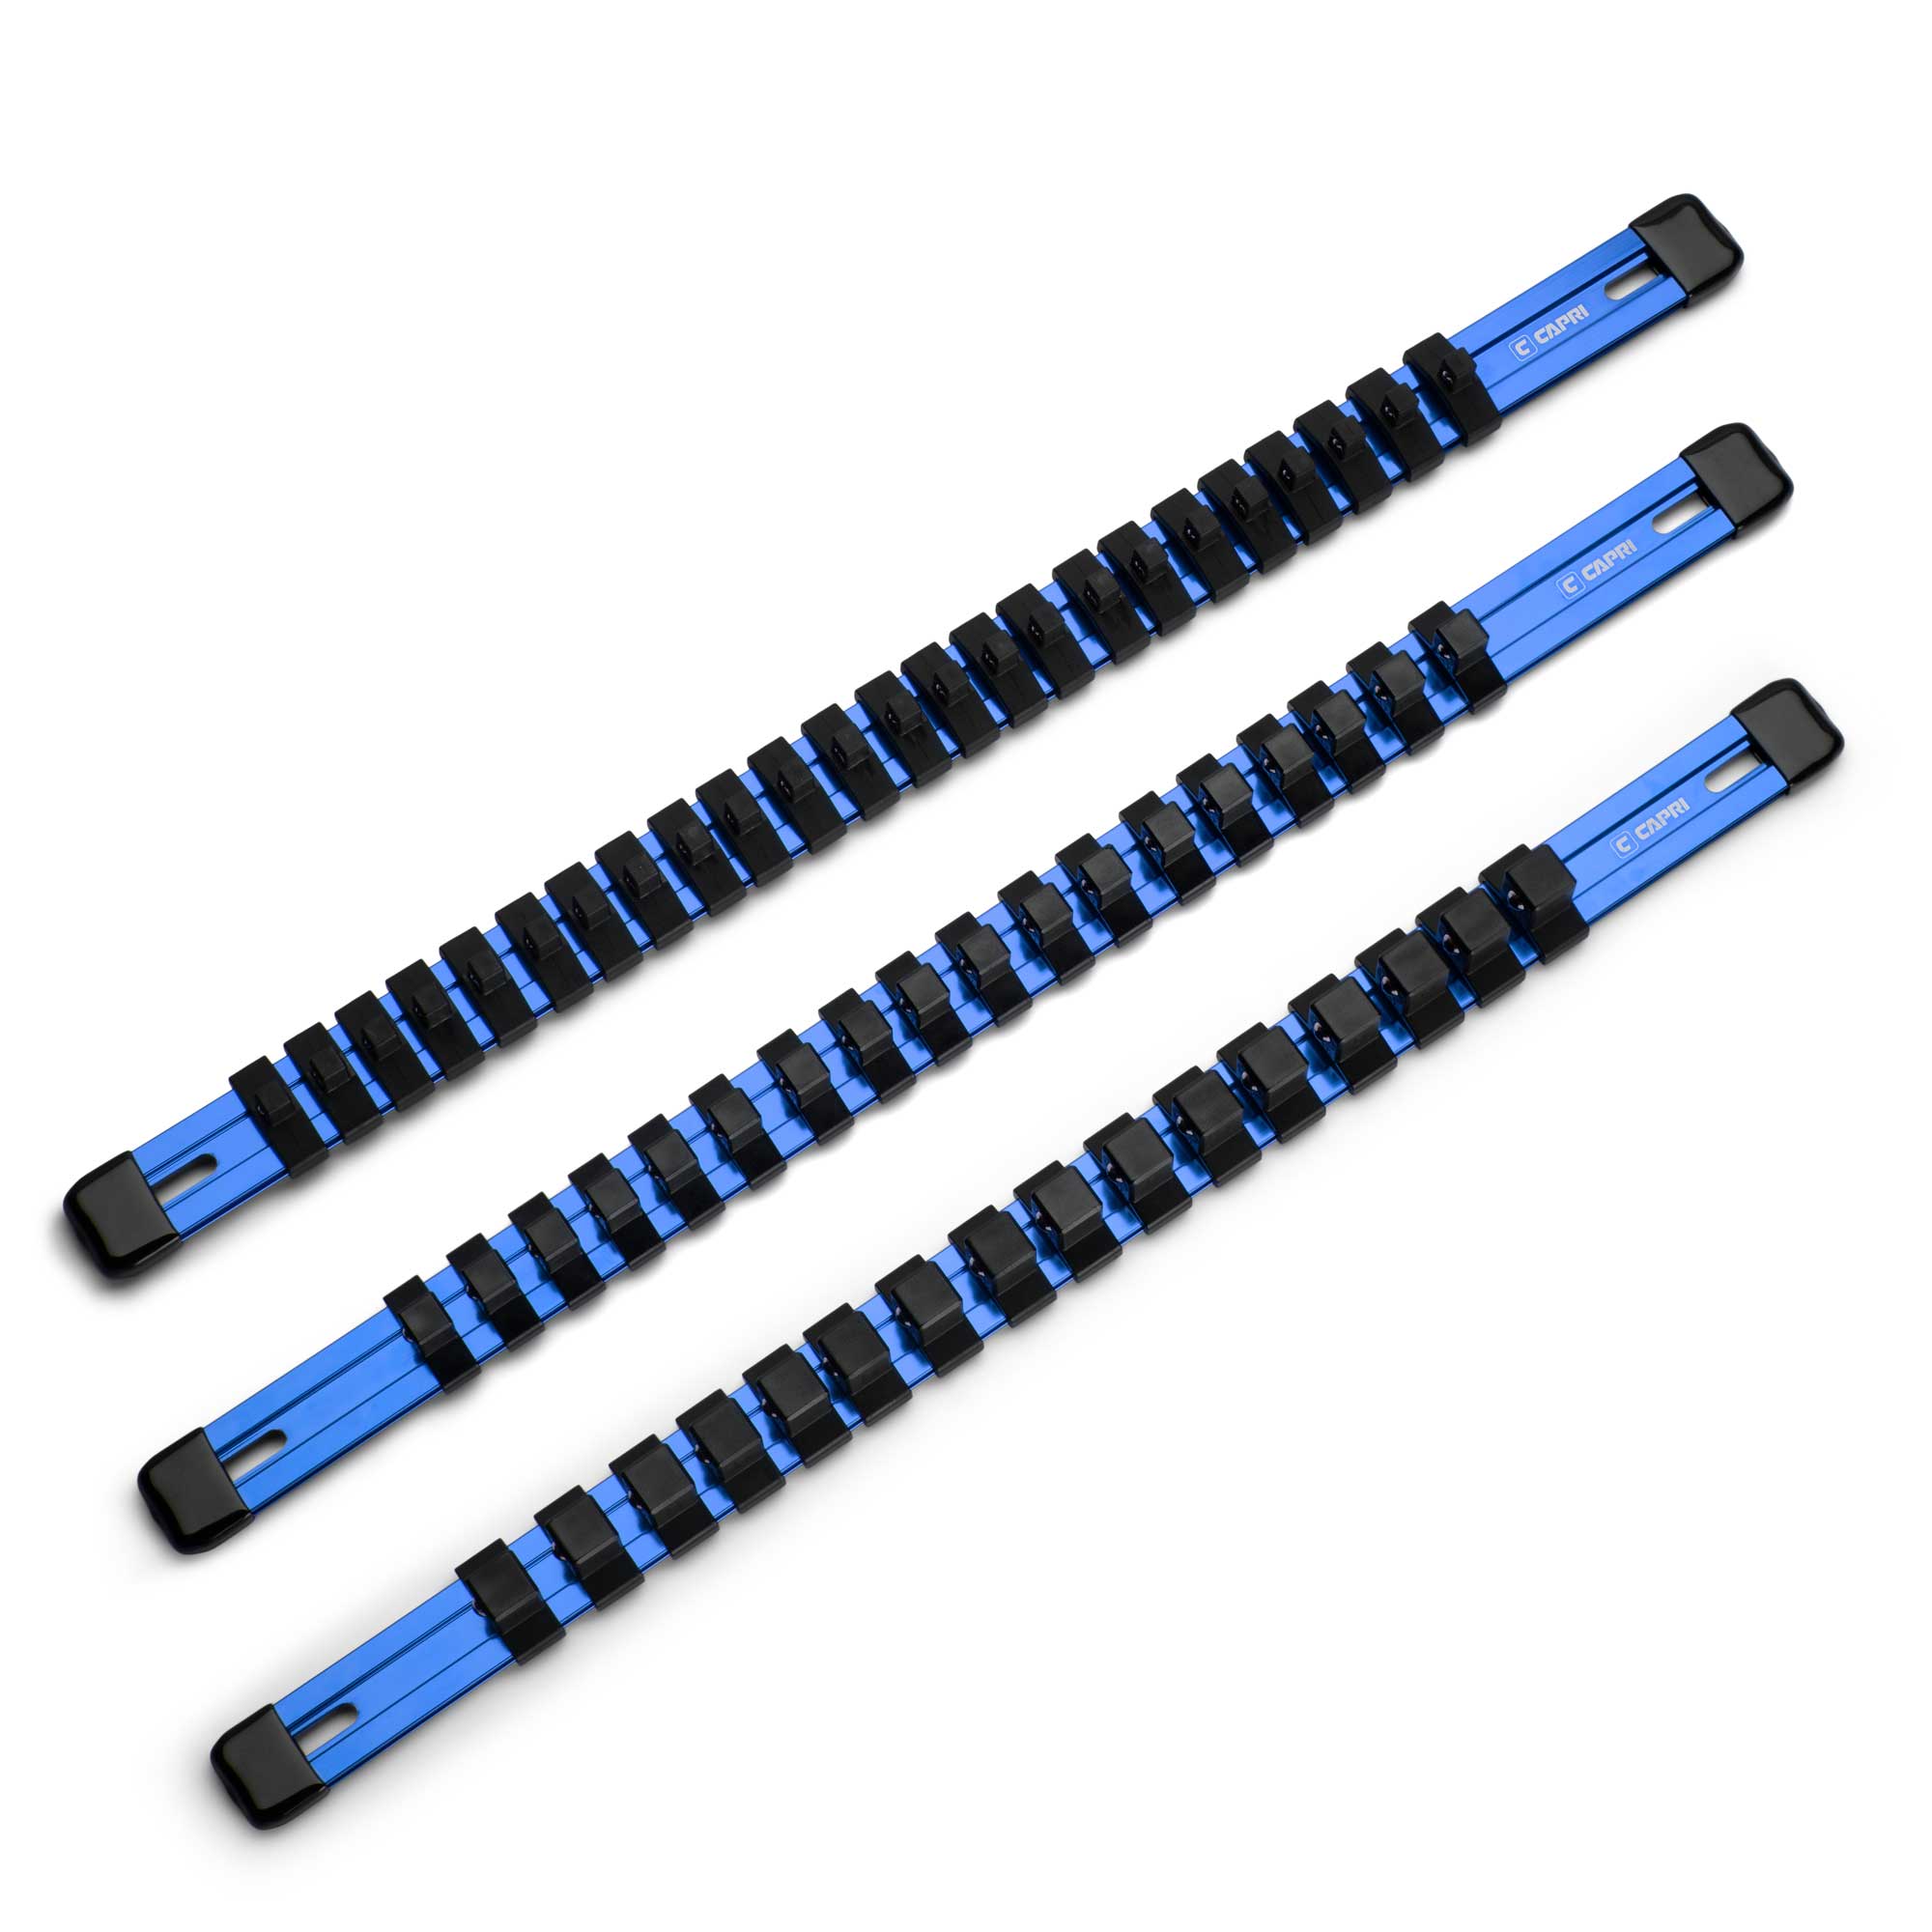 Capri Tools Aluminum Socket Rail Set, 1/4", 3/8" and 1/2" Drive, 17" Long, Blue, 3-Piece Rail with 58 Socket Clips - image 1 of 7